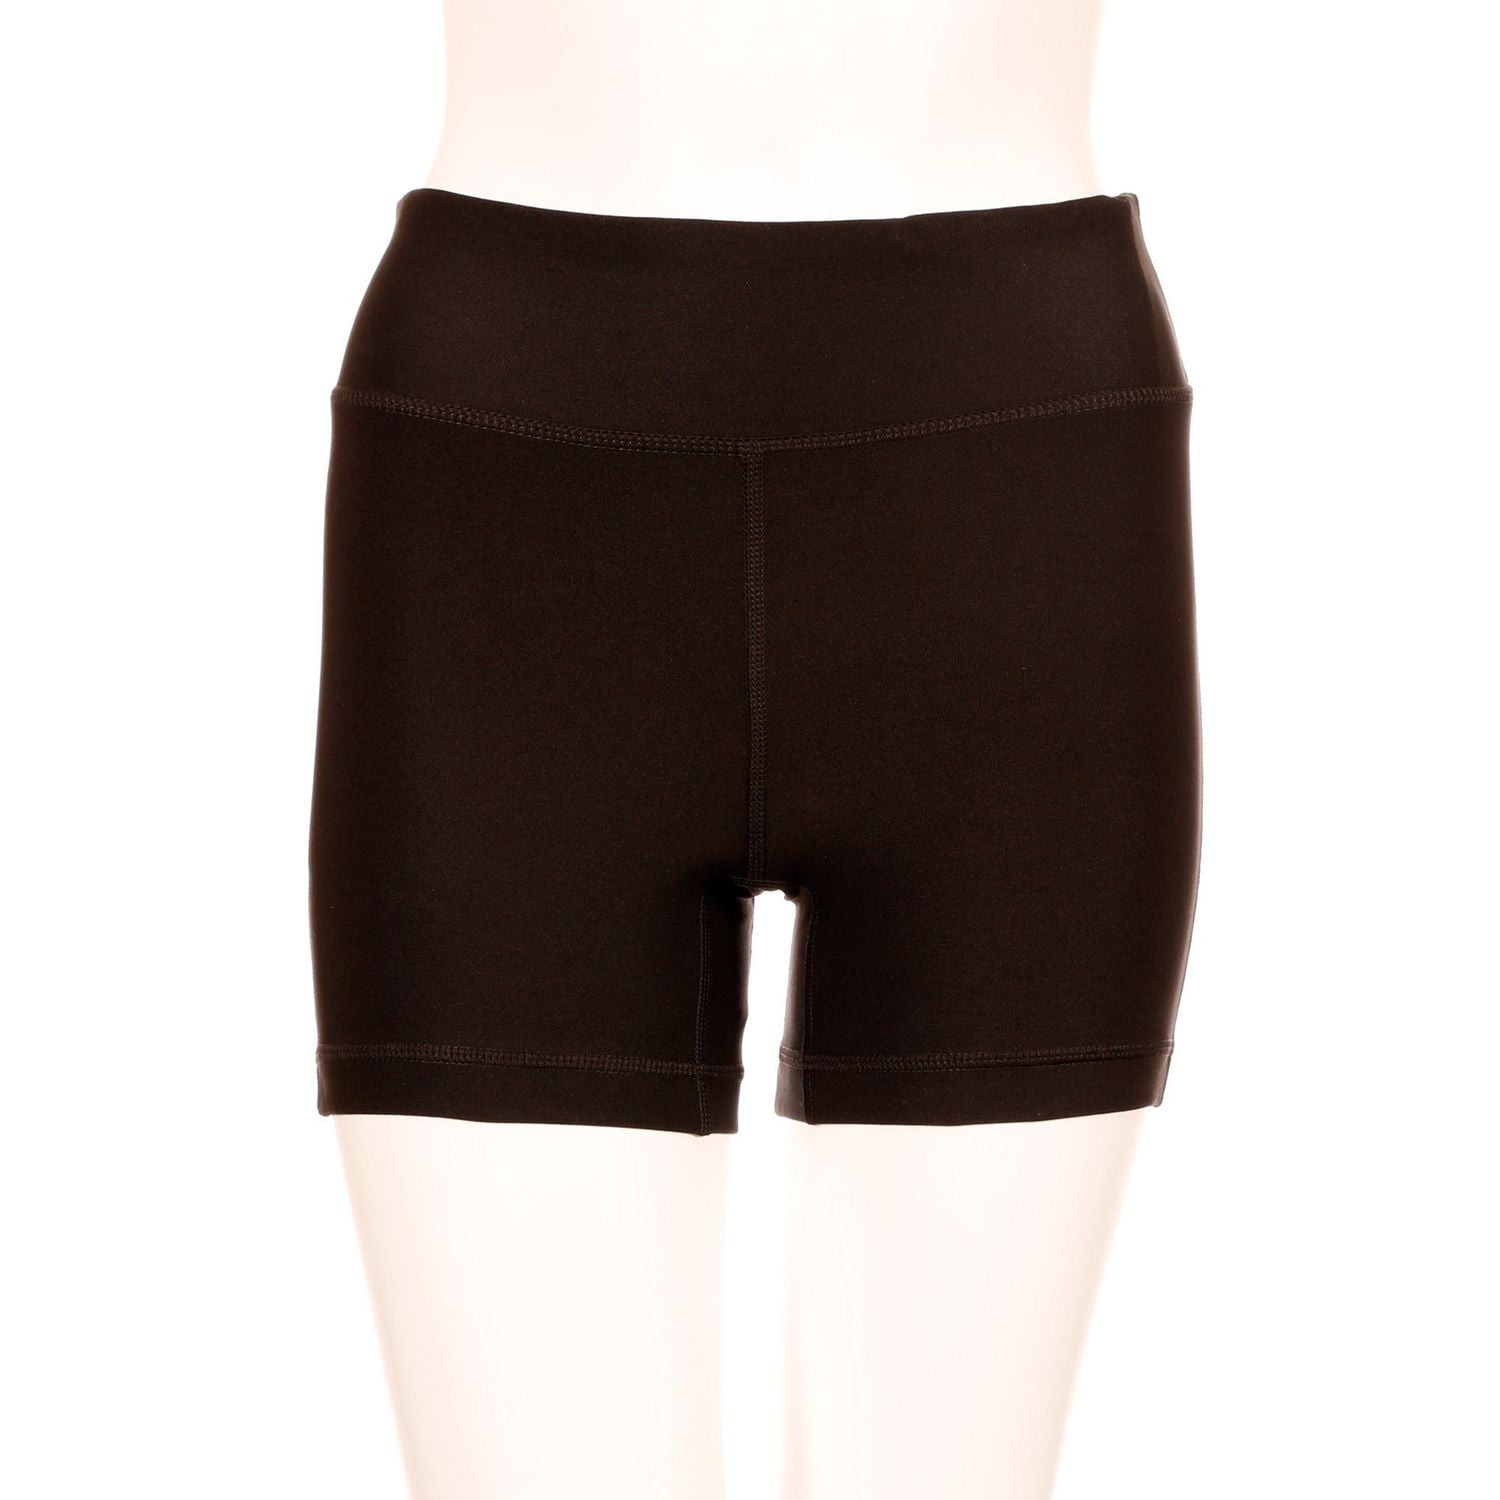 Tuff Athletics Women's Hybrid Shorts Black XL and 25 similar items